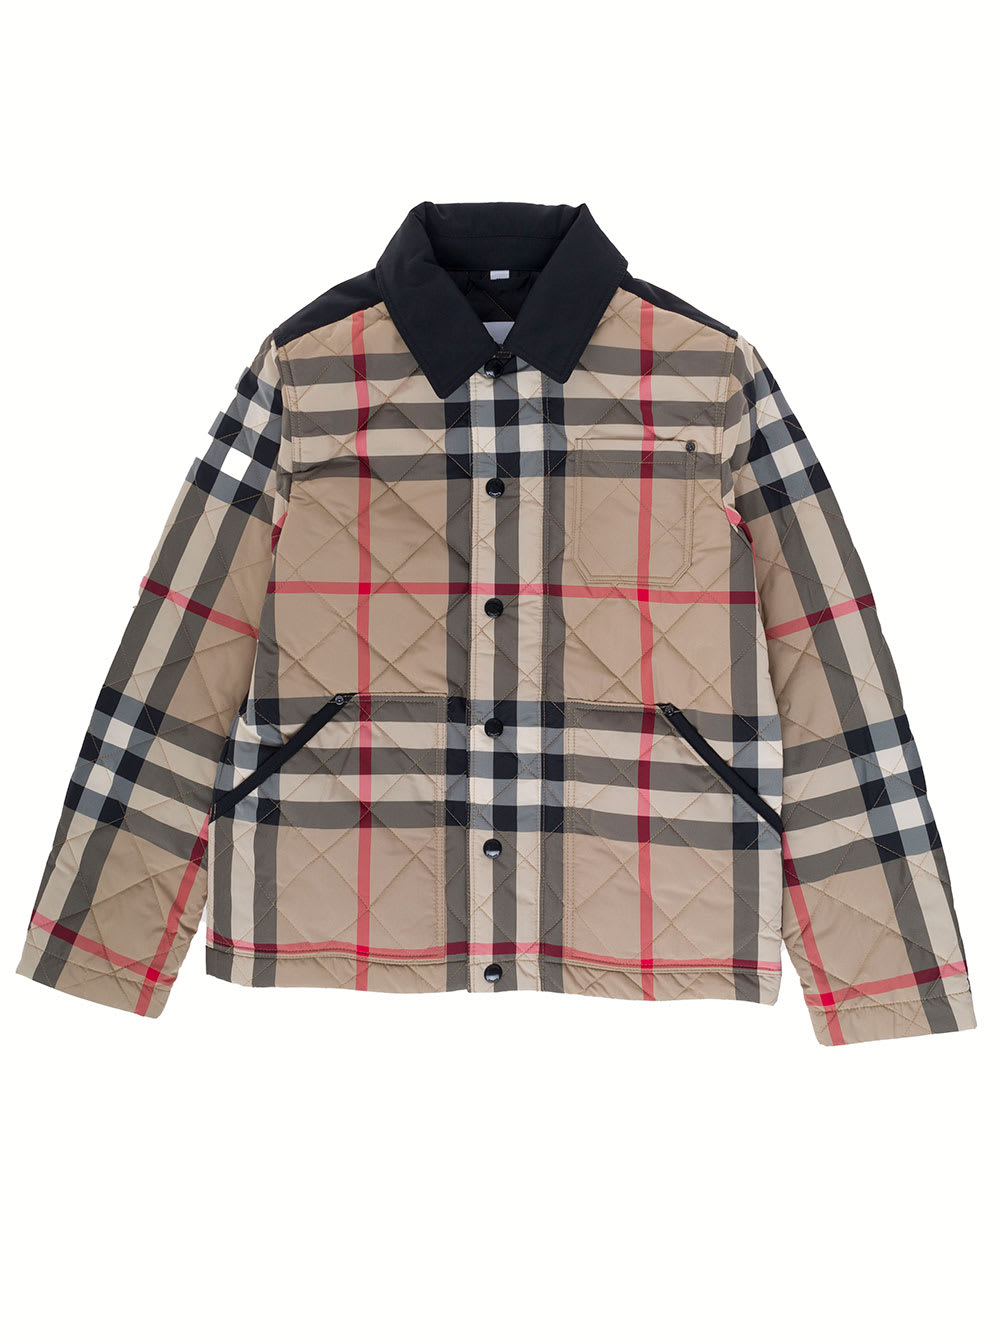 Burberry Boy Nylon Beige Jacket With Vintage Check Print